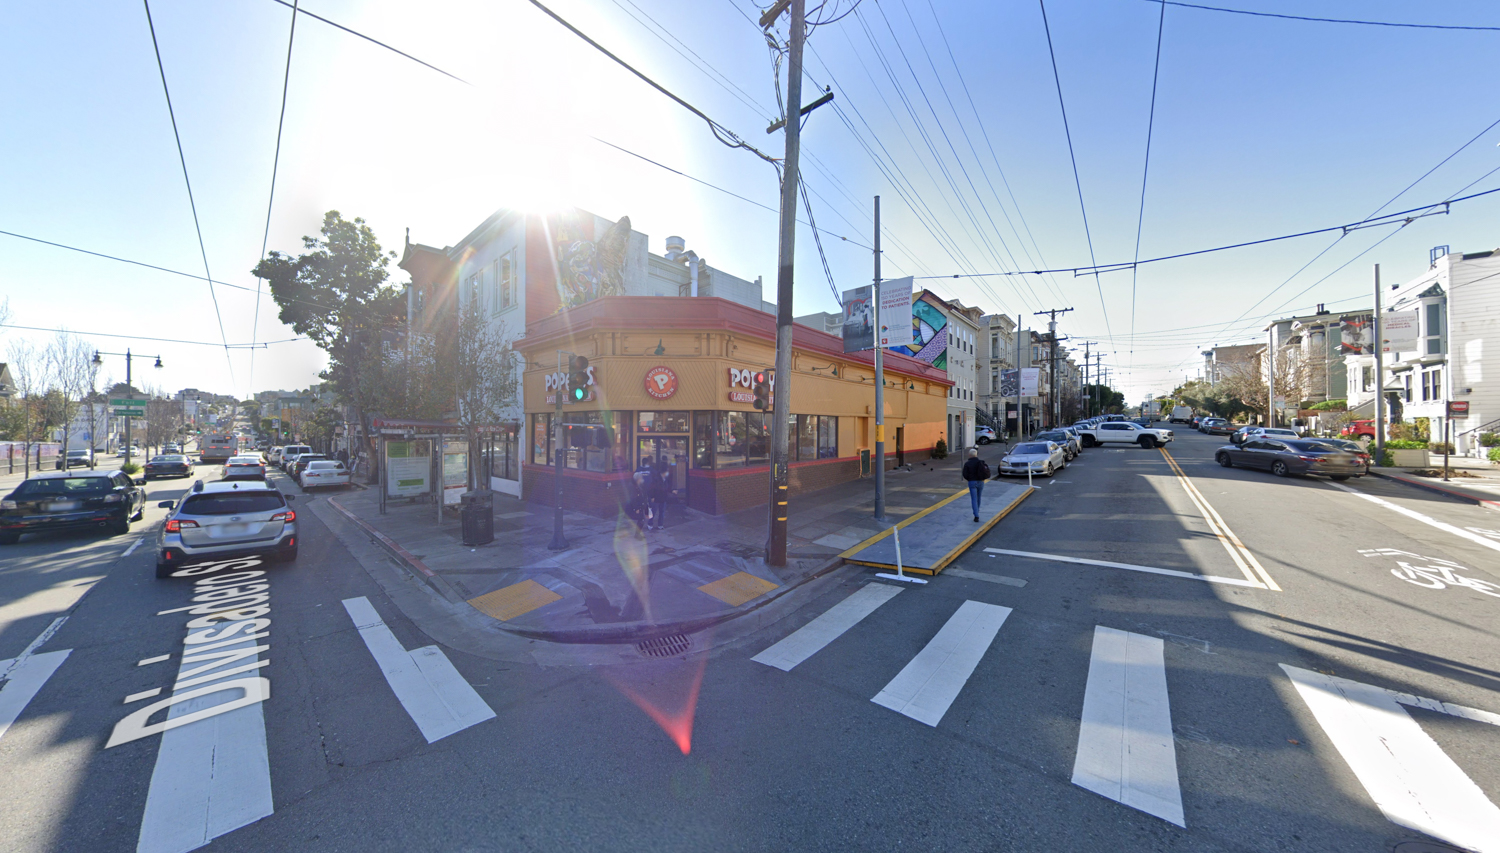 599 Divisadero Street, image via Google Street View